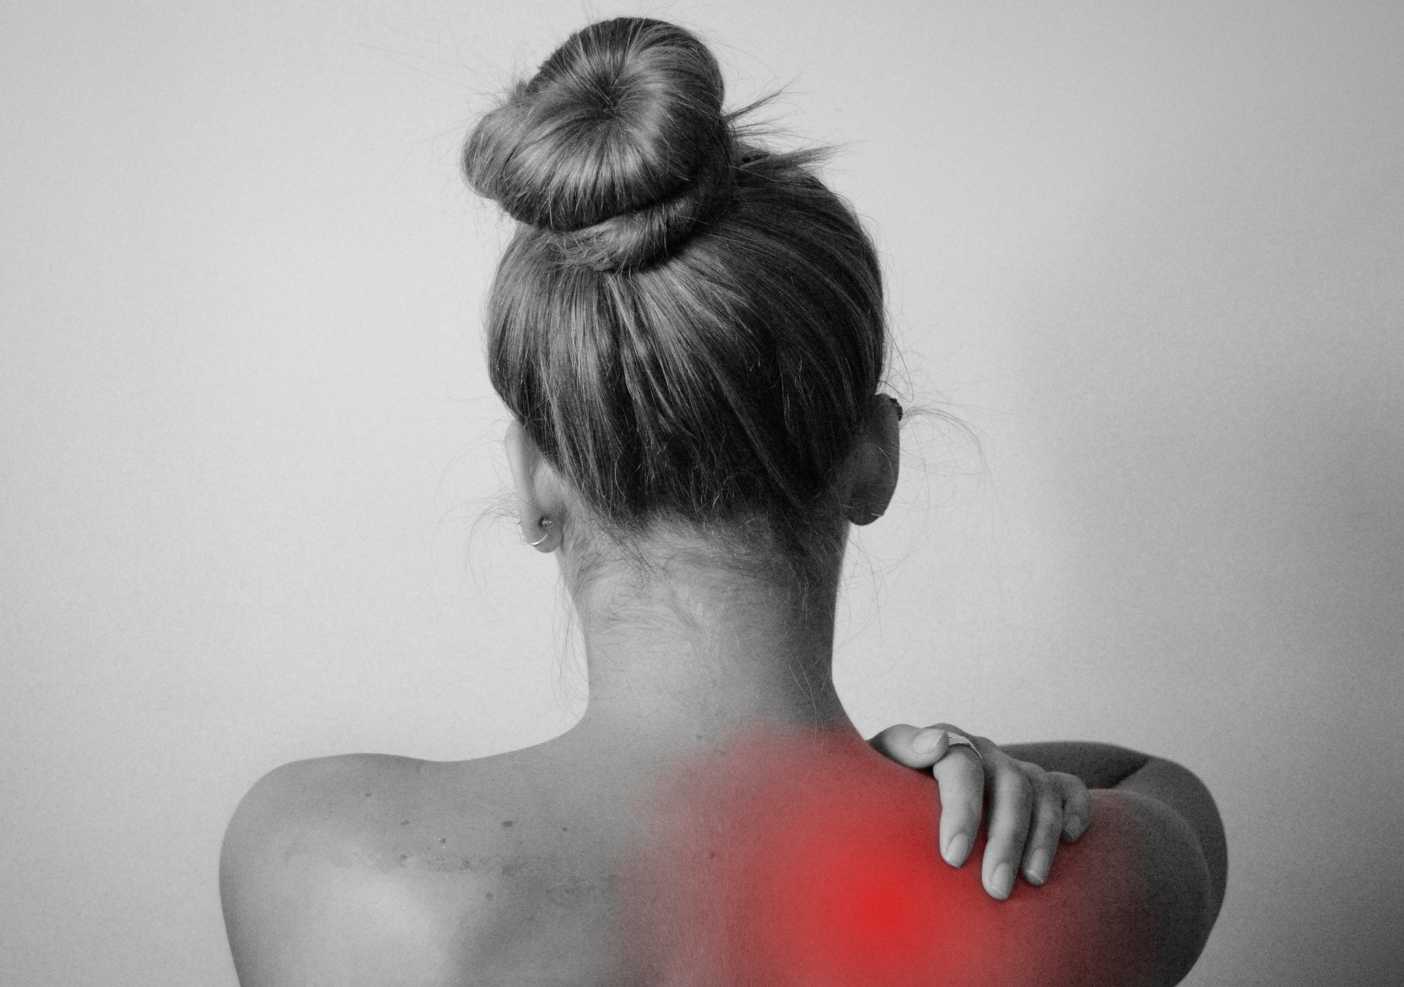 https://pixabay.com/photos/back-pain-shoulder-injury-sun-5163495/